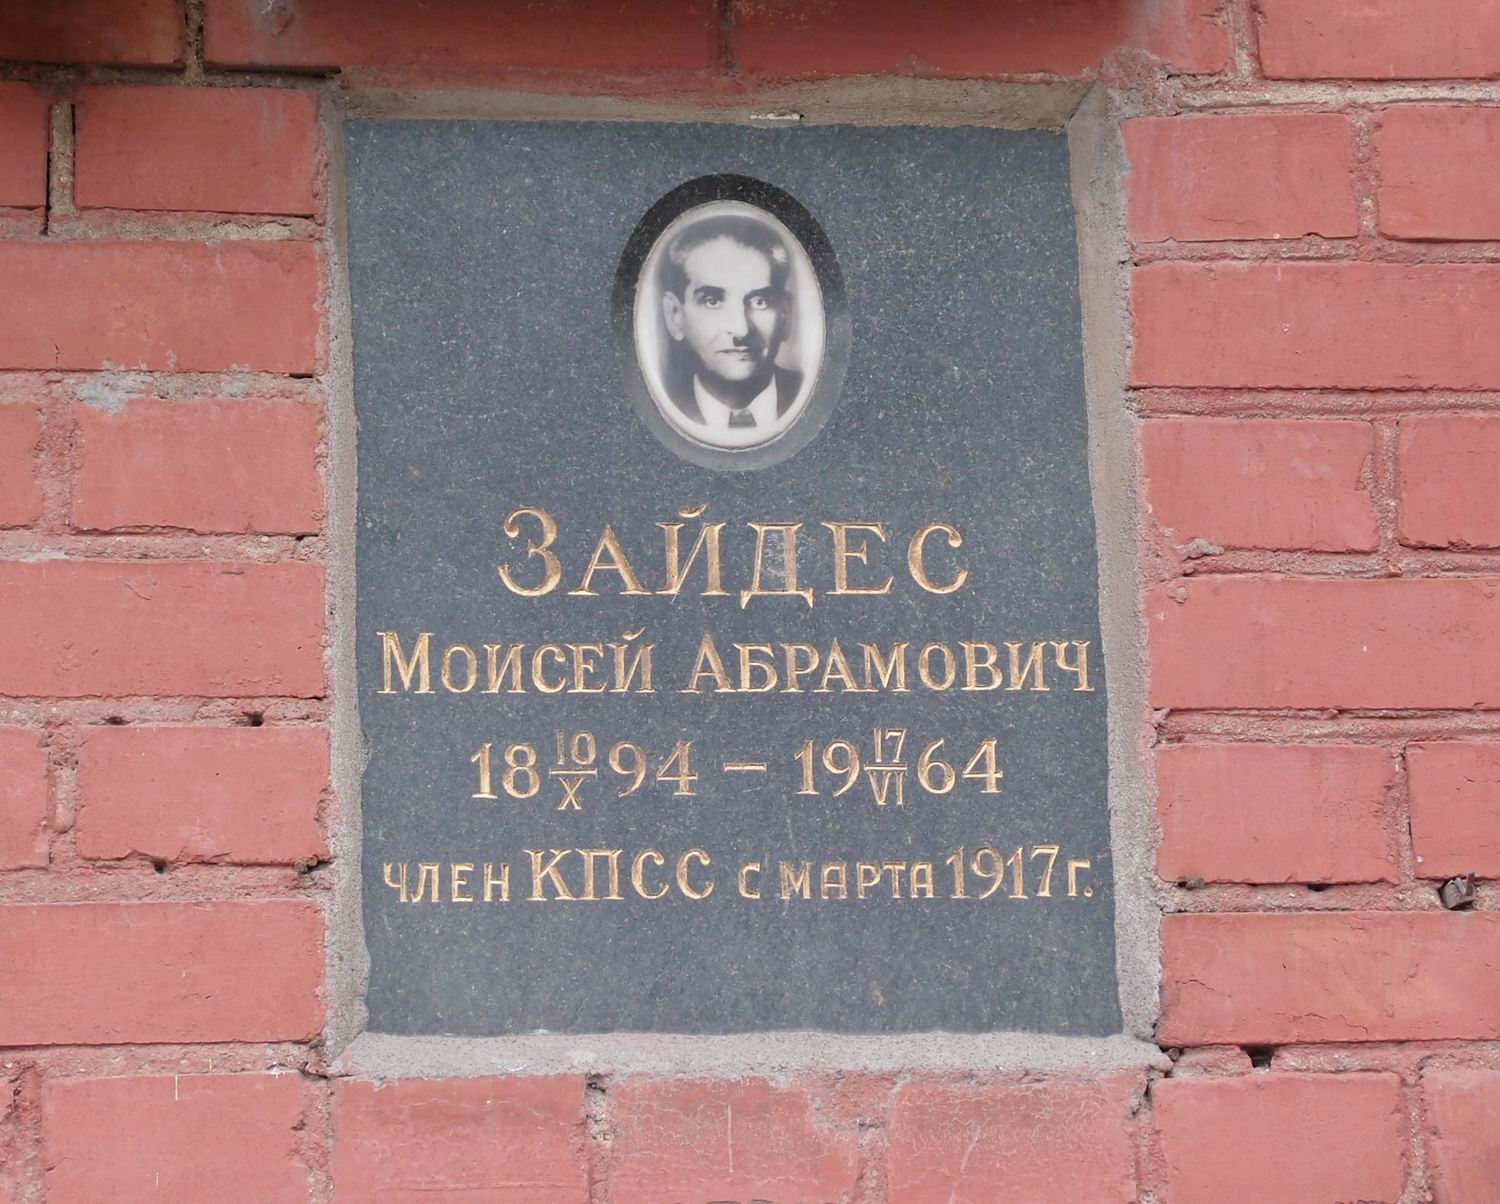 Плита на нише Зайдеса М.А. (1894-1964), на Новодевичьем кладбище (колумбарий [125]-13-2).